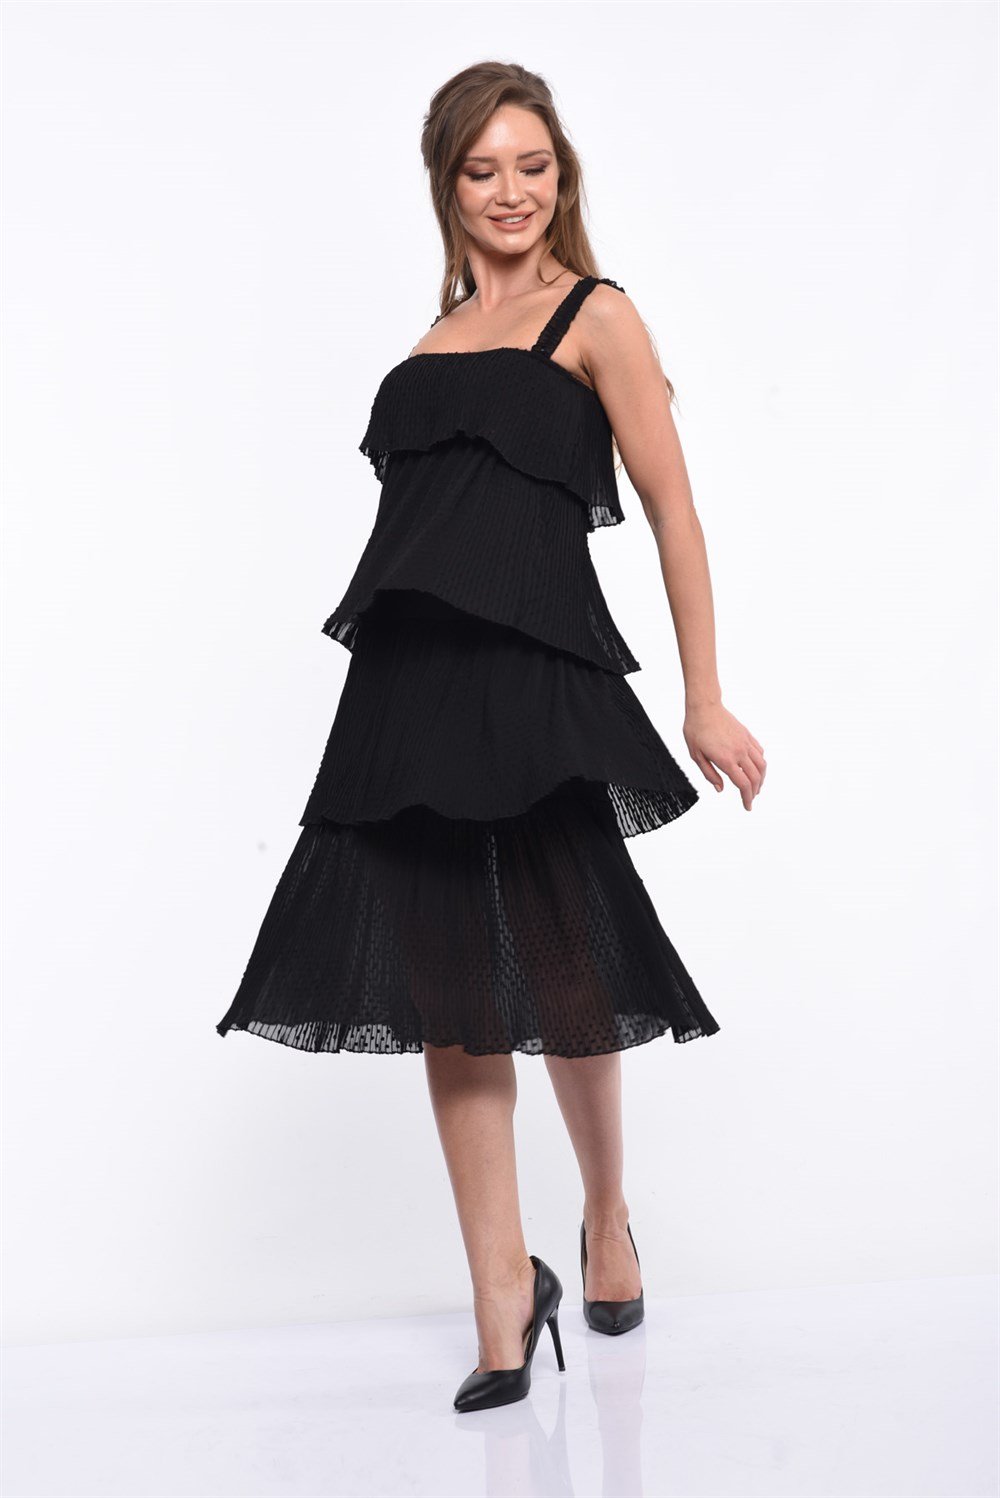 Siyah Askılı Fırfırlı Tül Elbise|For Angels